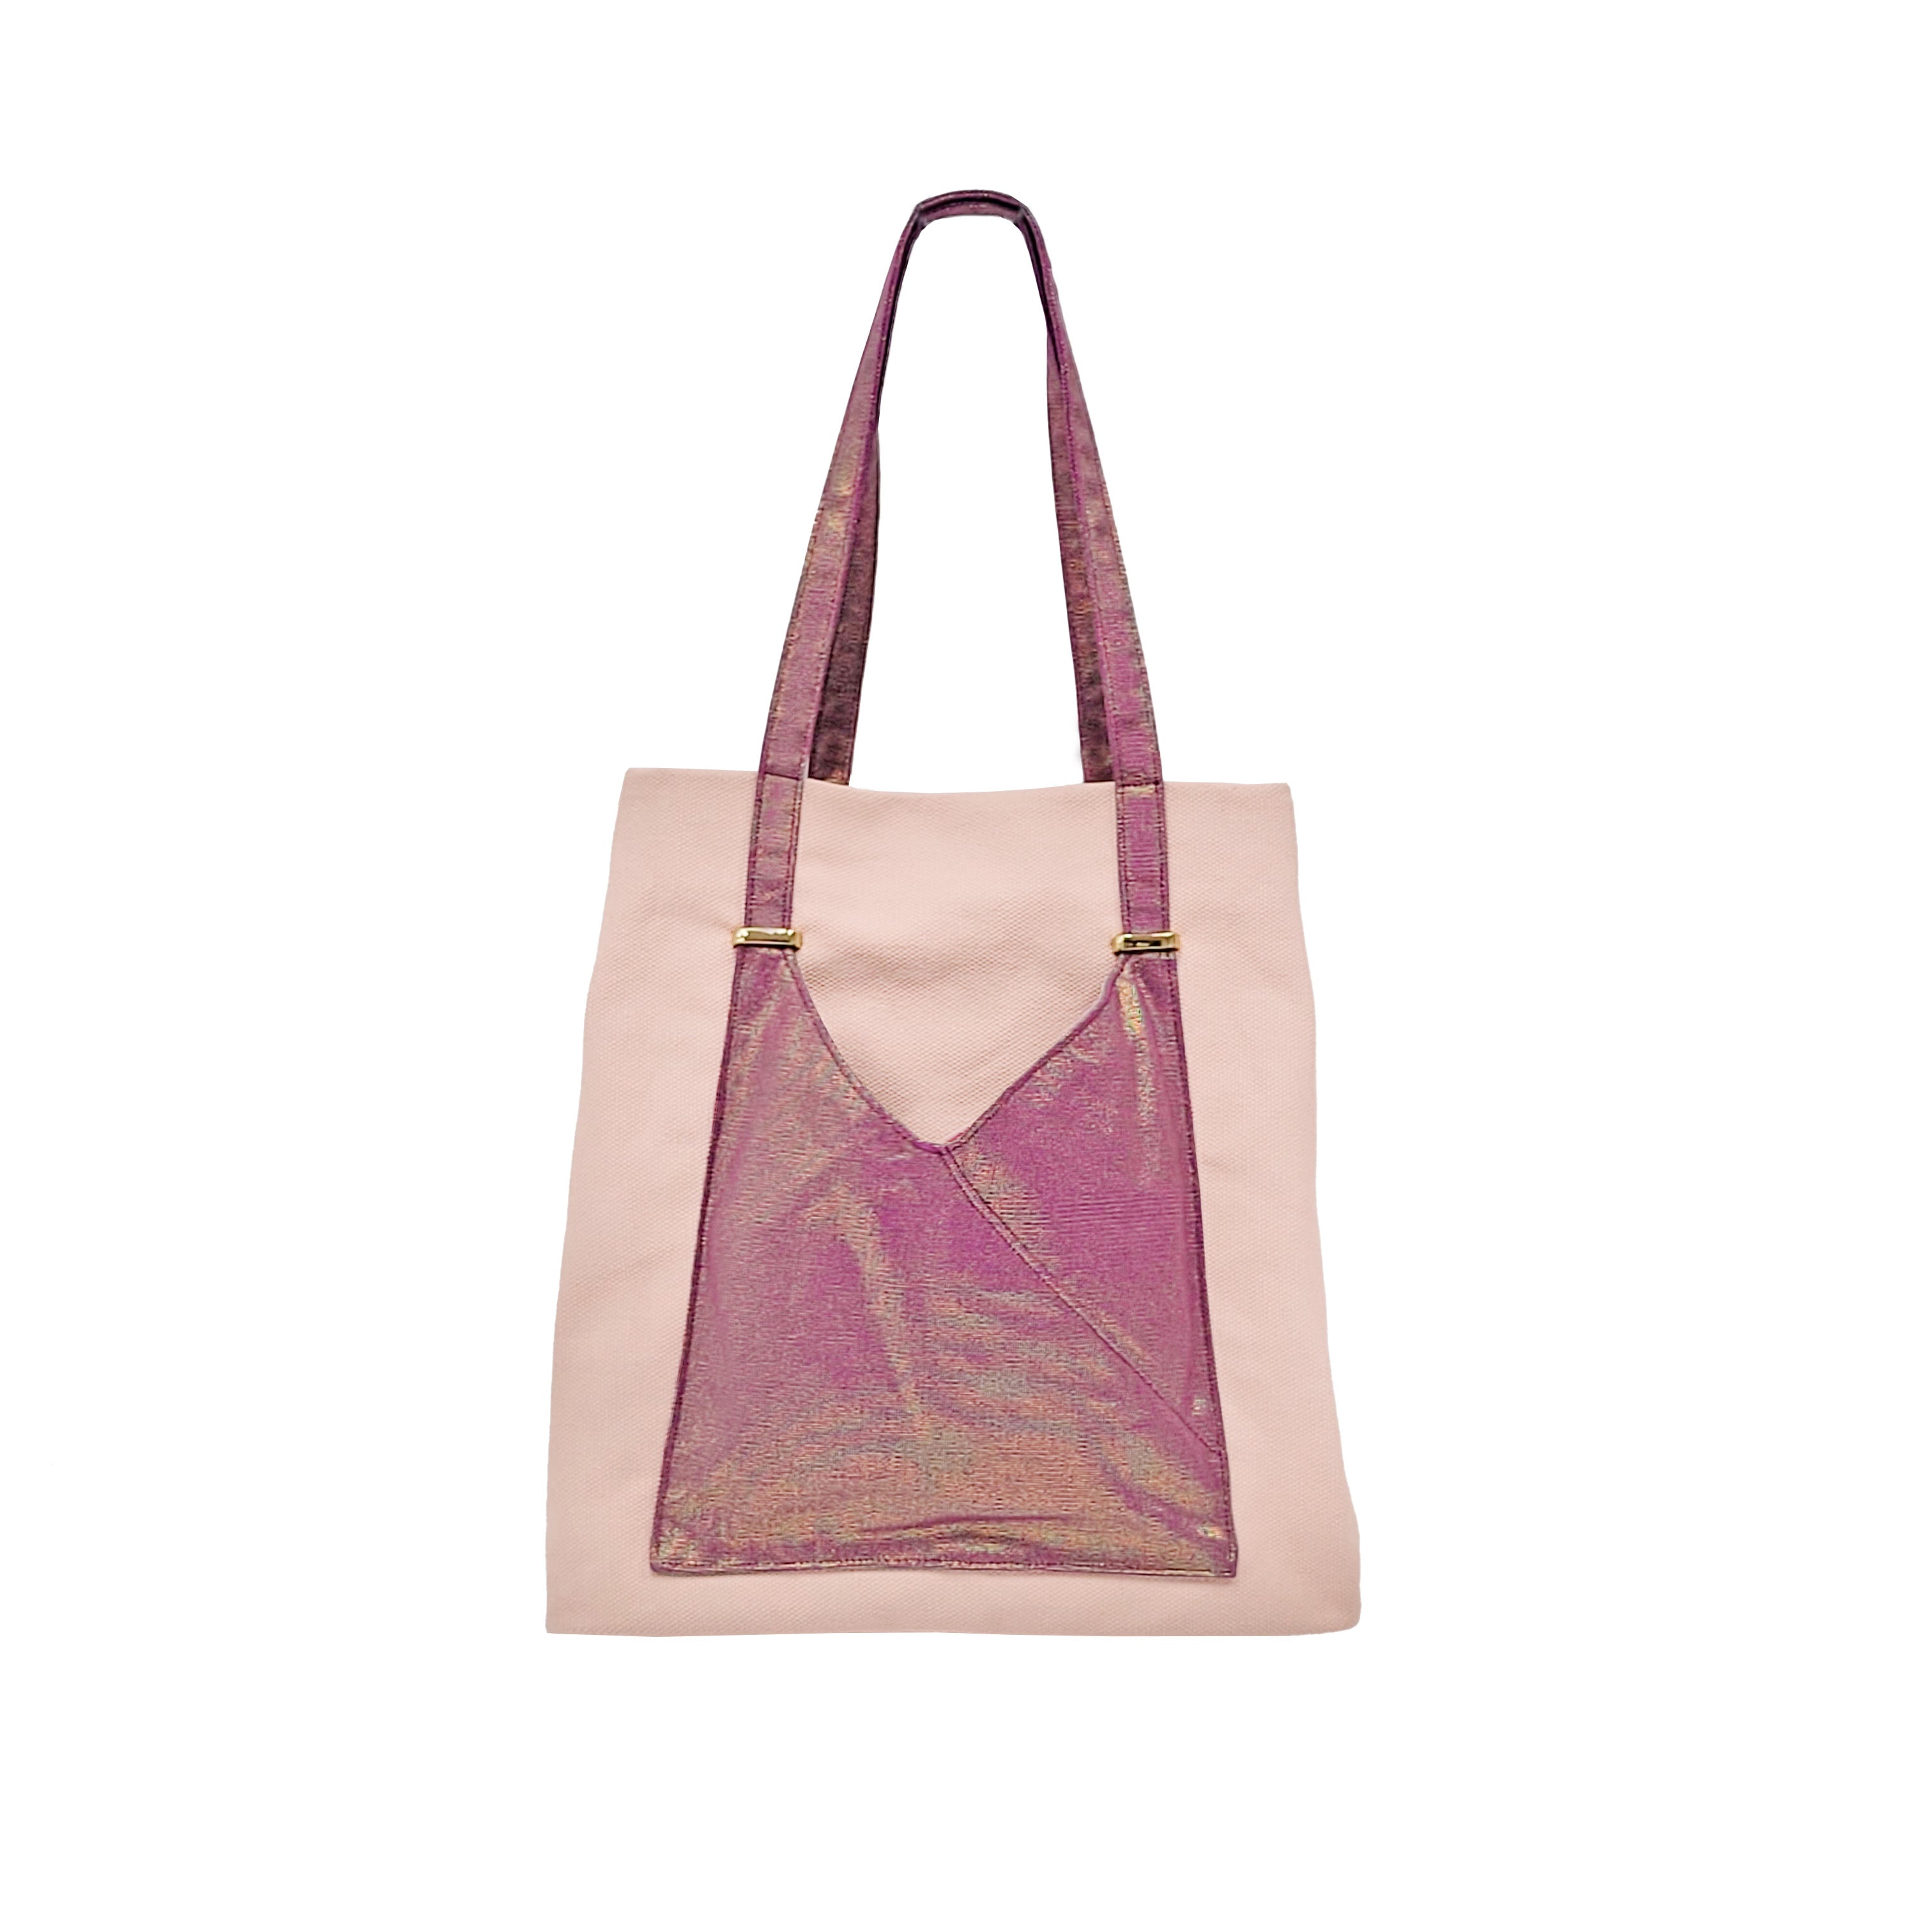 Metallic Canvas Tote Bag-everyday bag-tote bag for women-weekender bag for women-carryall tote